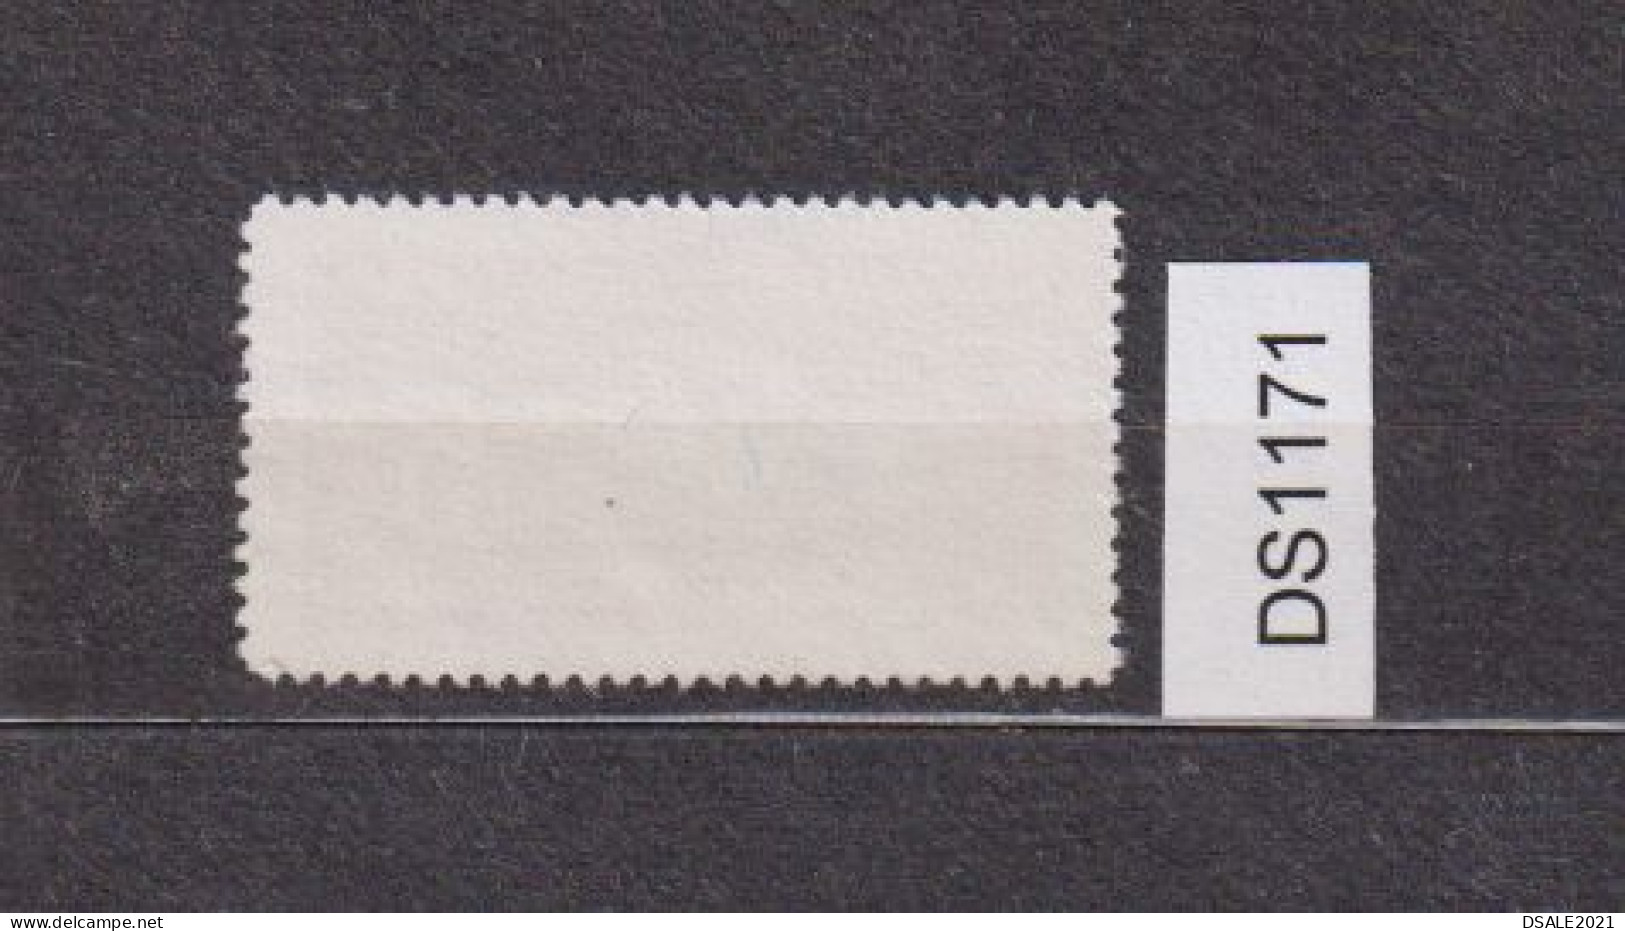 Union Des Automobilistes Bulgares, Union Of Bulgarian Motorists, 1975 Membership Paid Stamp Fiscal Revenue 5Lv. (ds1171) - Official Stamps